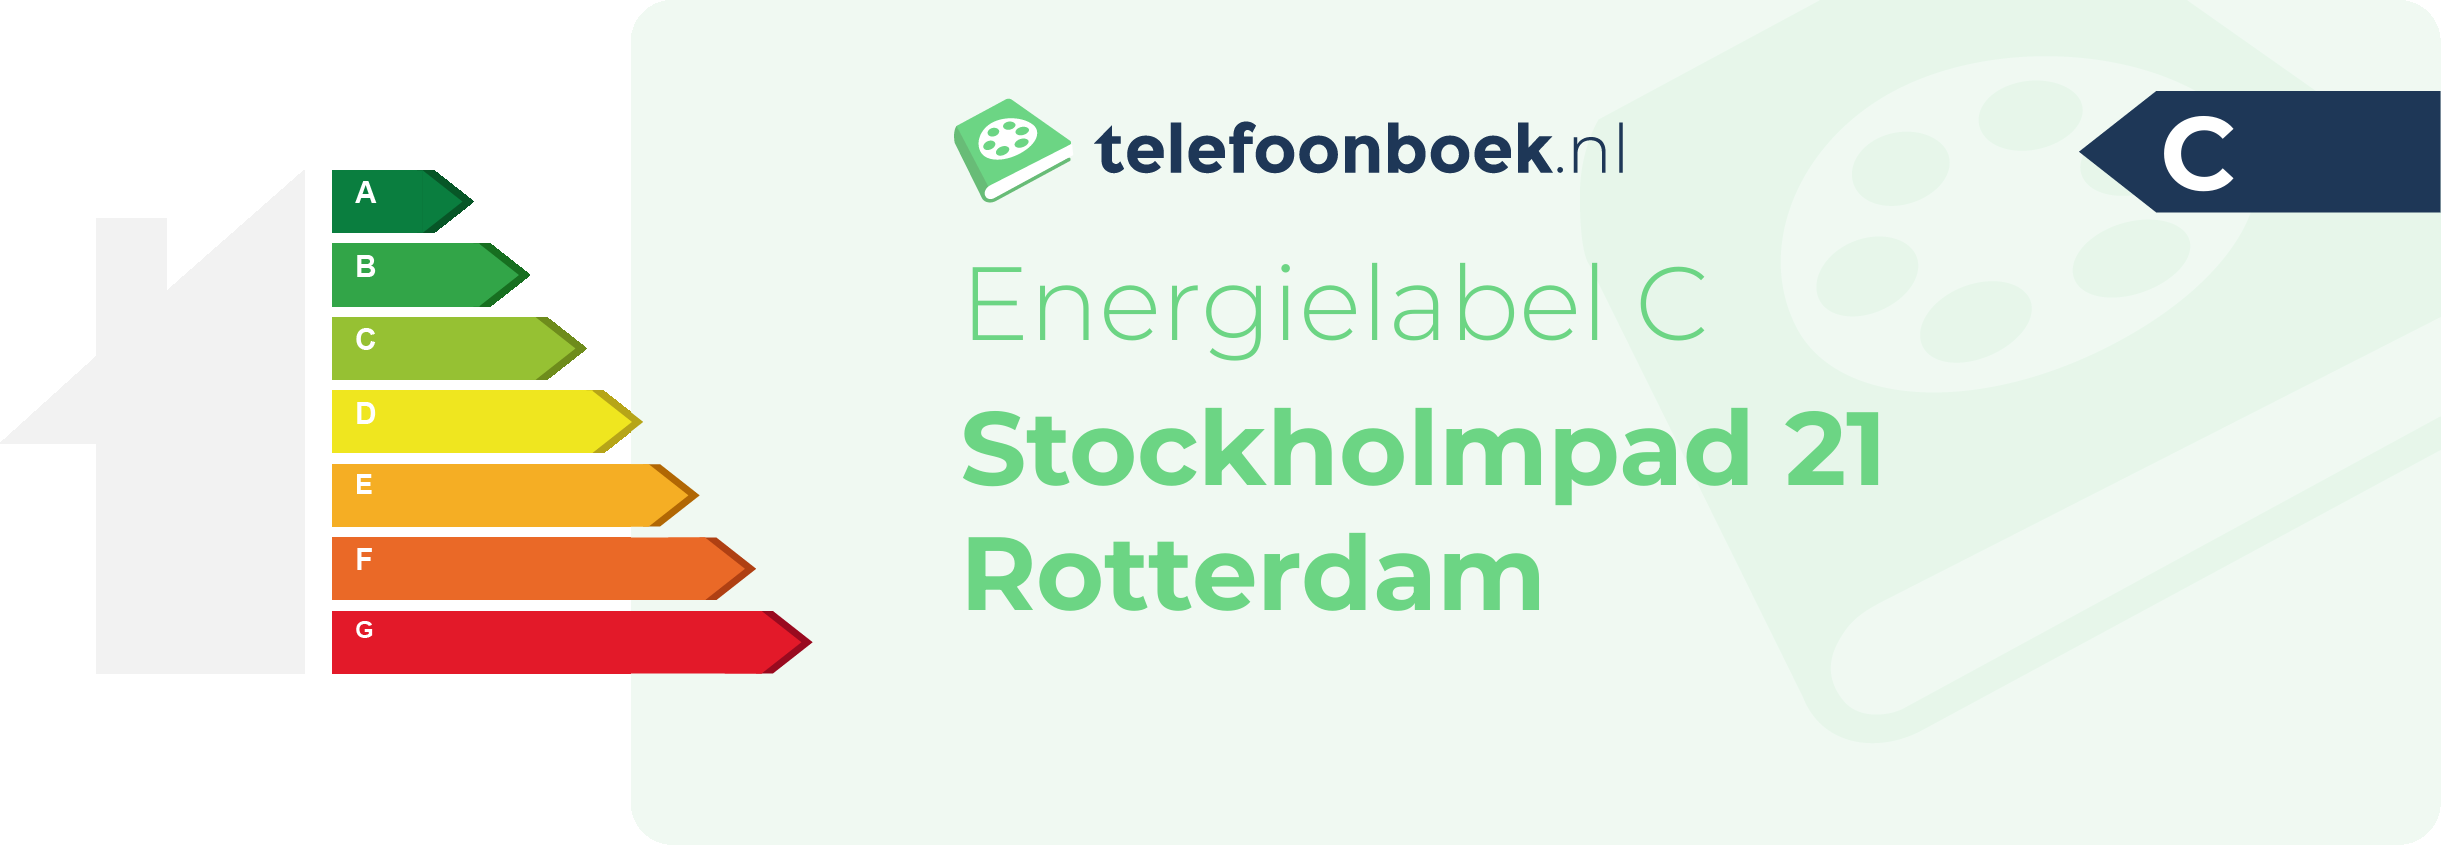 Energielabel Stockholmpad 21 Rotterdam